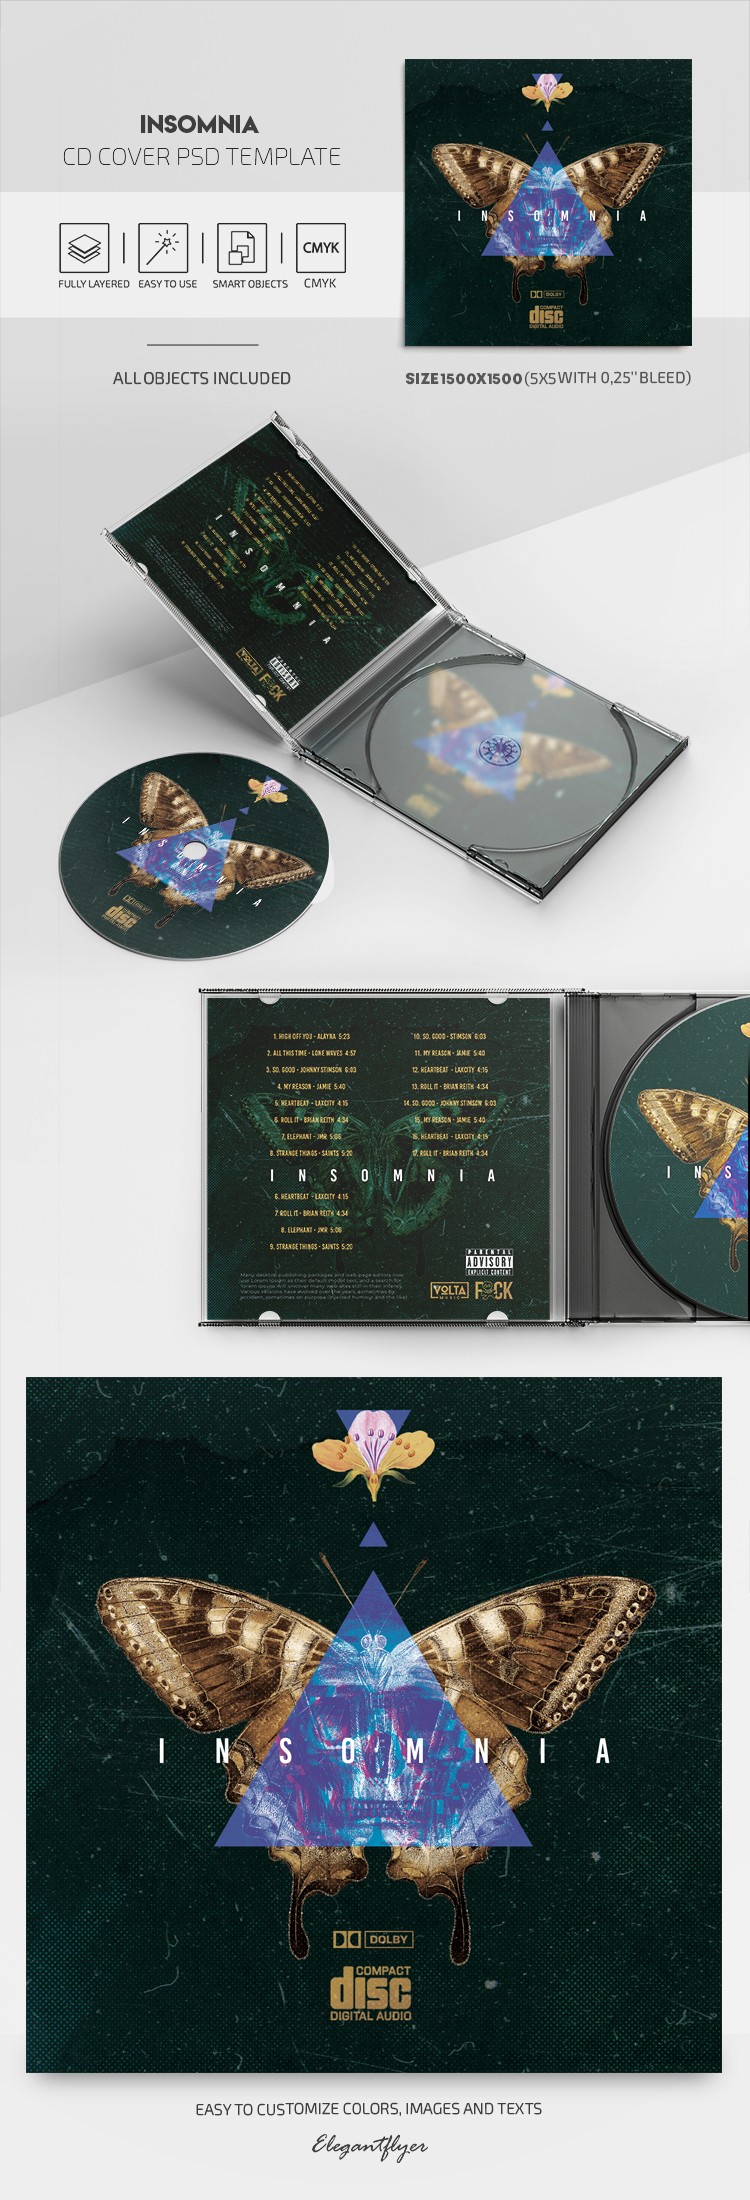 Portada del CD Insomnia by ElegantFlyer